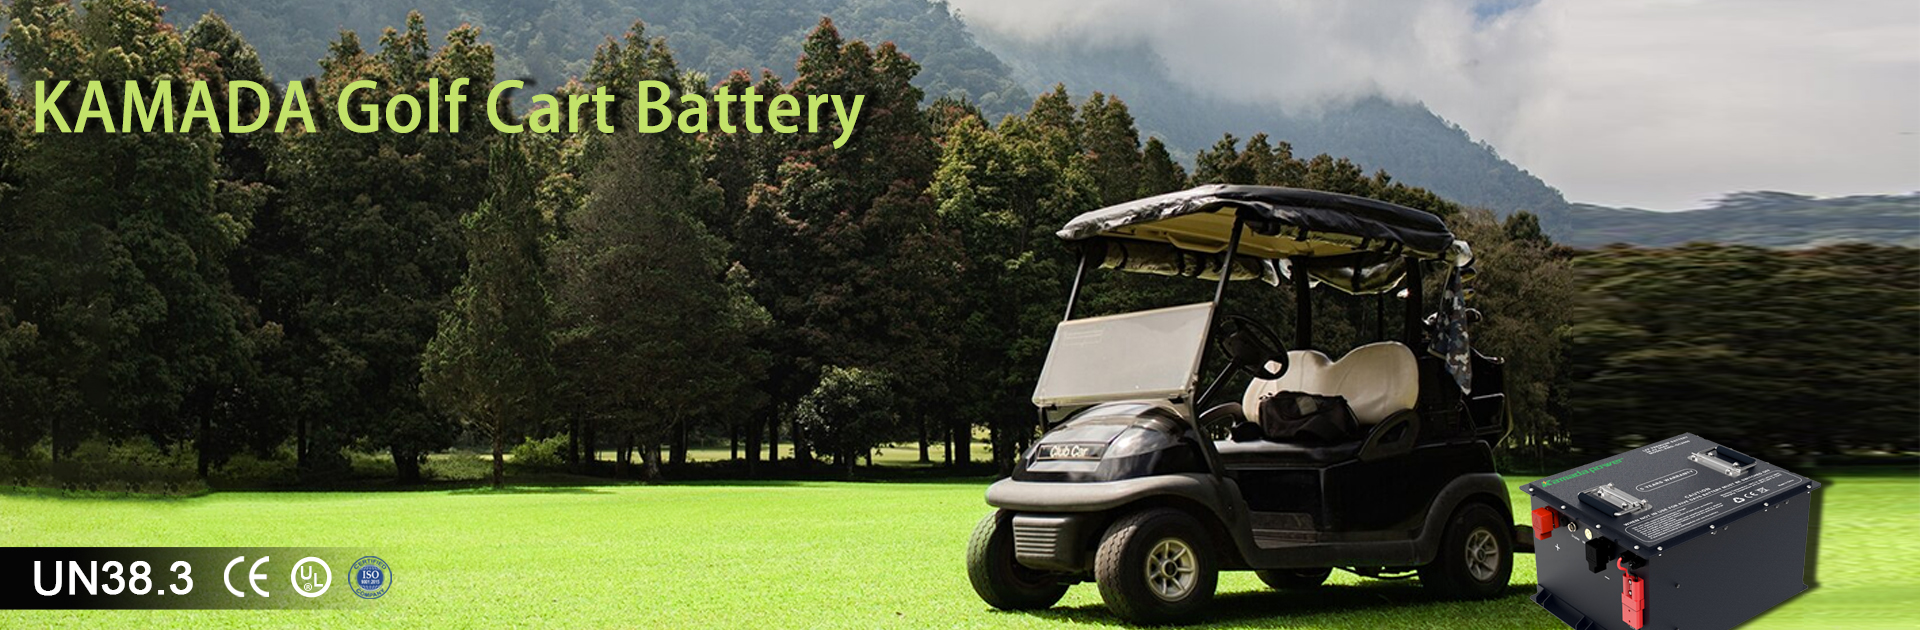 I-Kamada Golf Cart Battery Factory